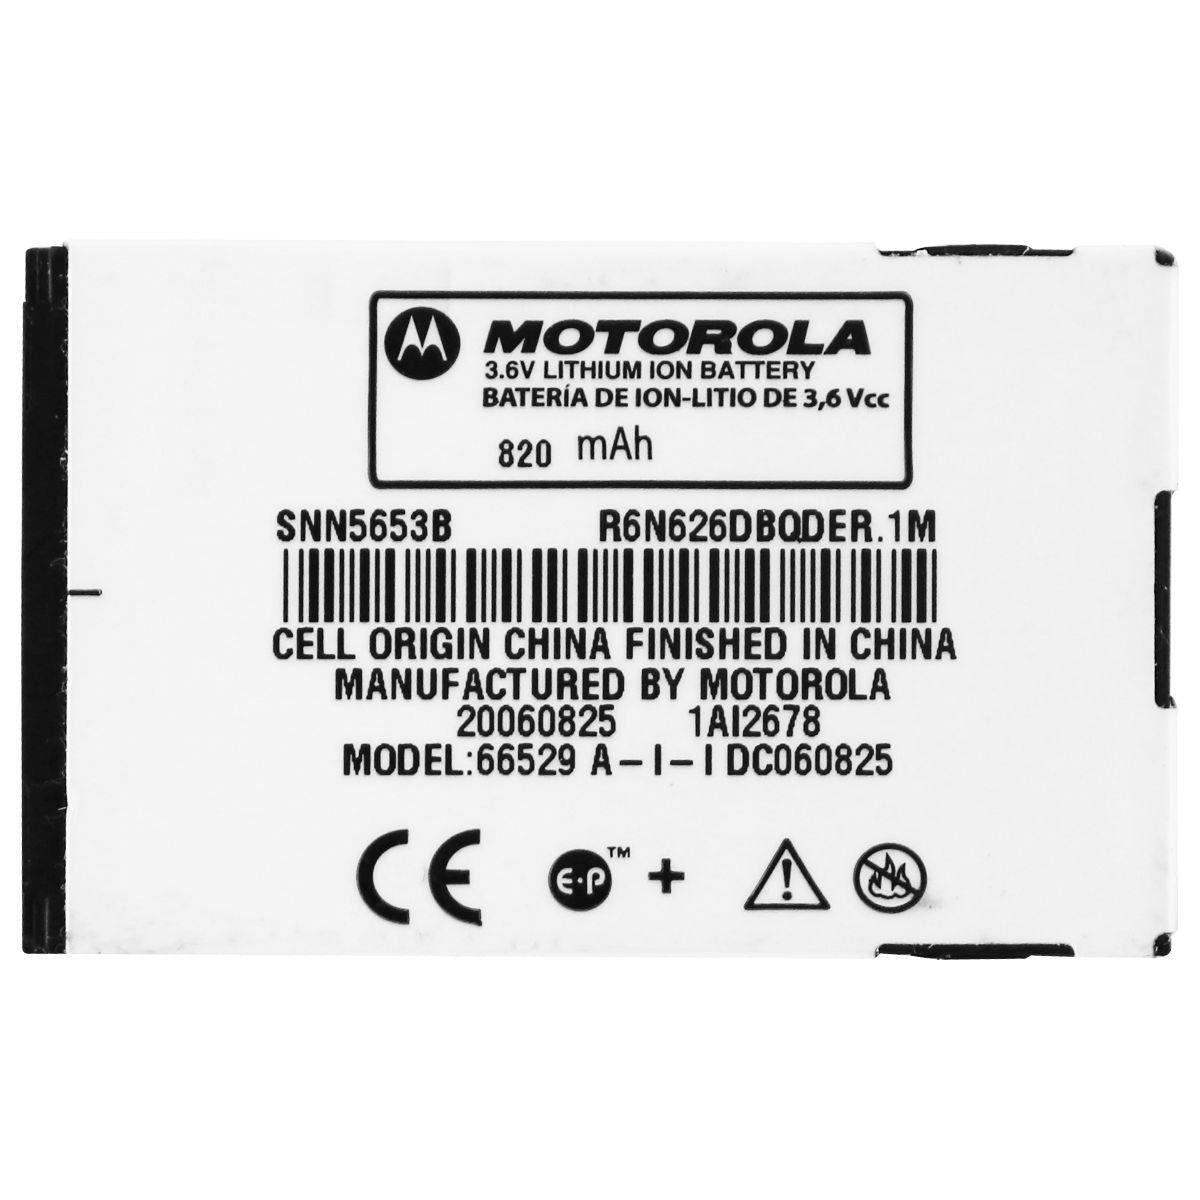 OEM Motorola SNN5653B 820 mAh Replacement Battery for Motorola Phones Cell Phone - Batteries Motorola    - Simple Cell Bulk Wholesale Pricing - USA Seller